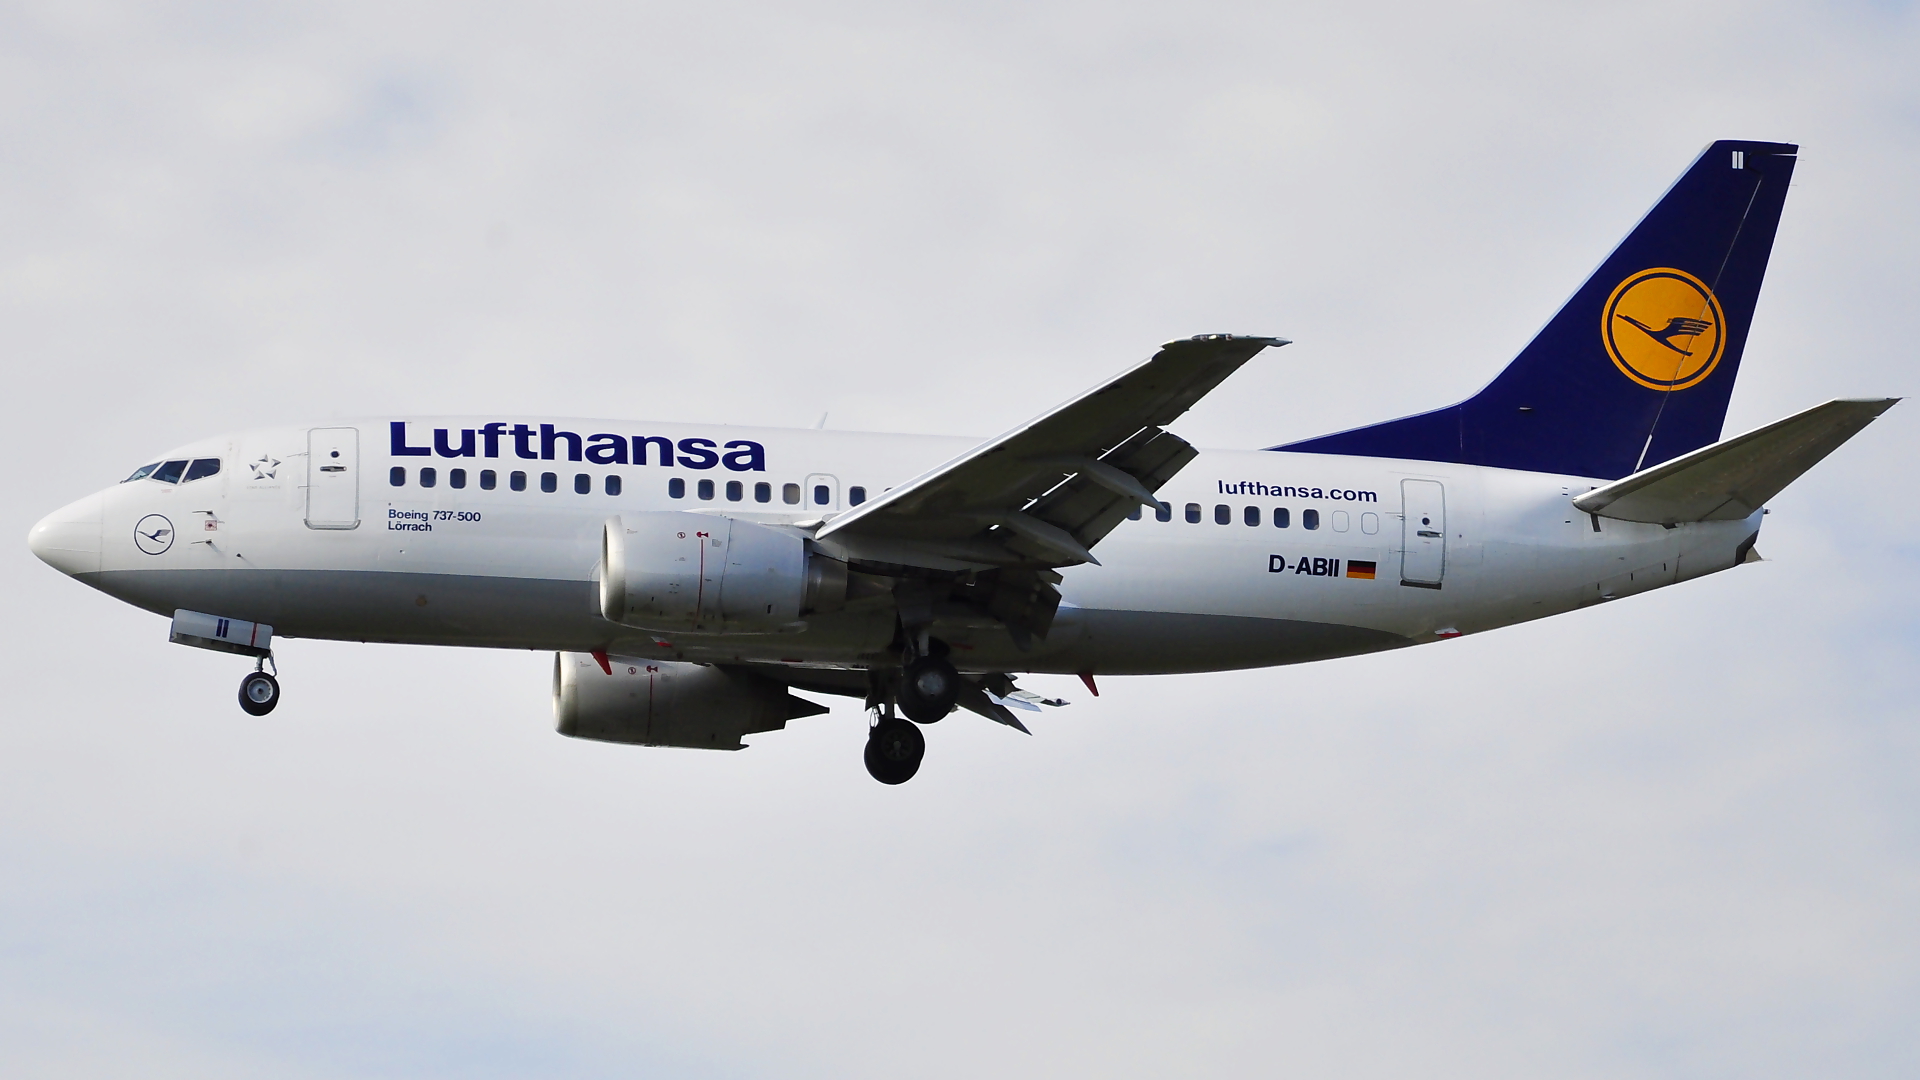 D-ABII ✈ Lufthansa Boeing 737-530 @ London-Heathrow